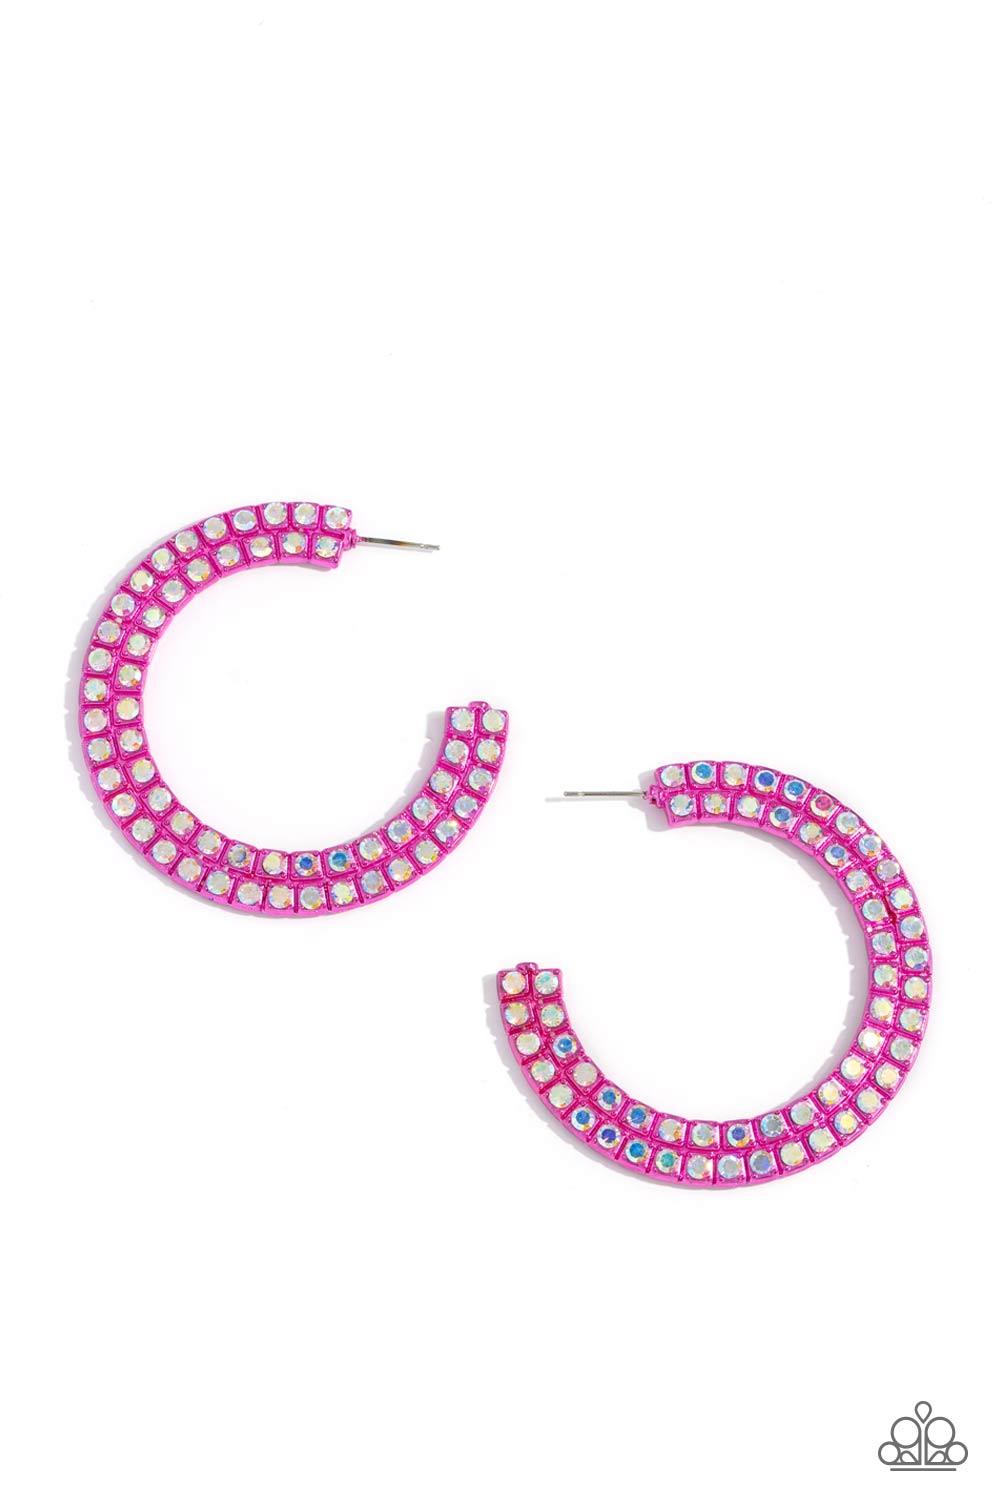 Paparazzi Accessories - Flawless Fashion - Pink Hoop Earrings - Bling by JessieK